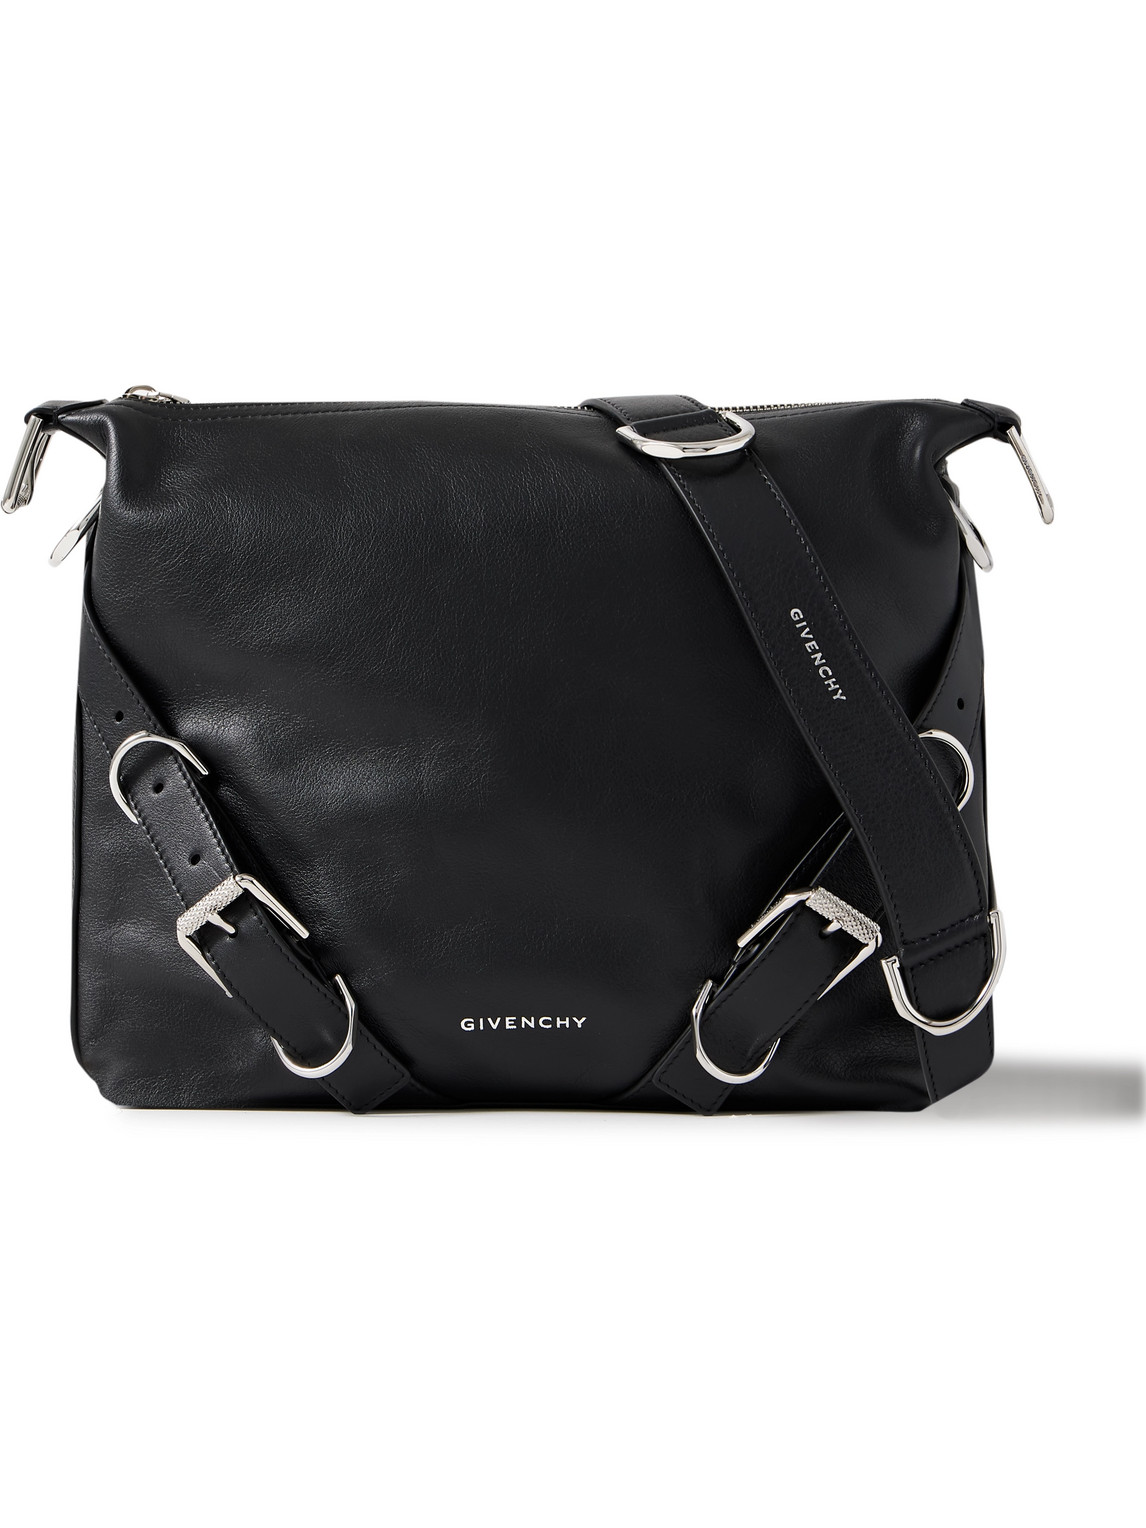 Givenchy Voyou Leather Messenger Bag In Black